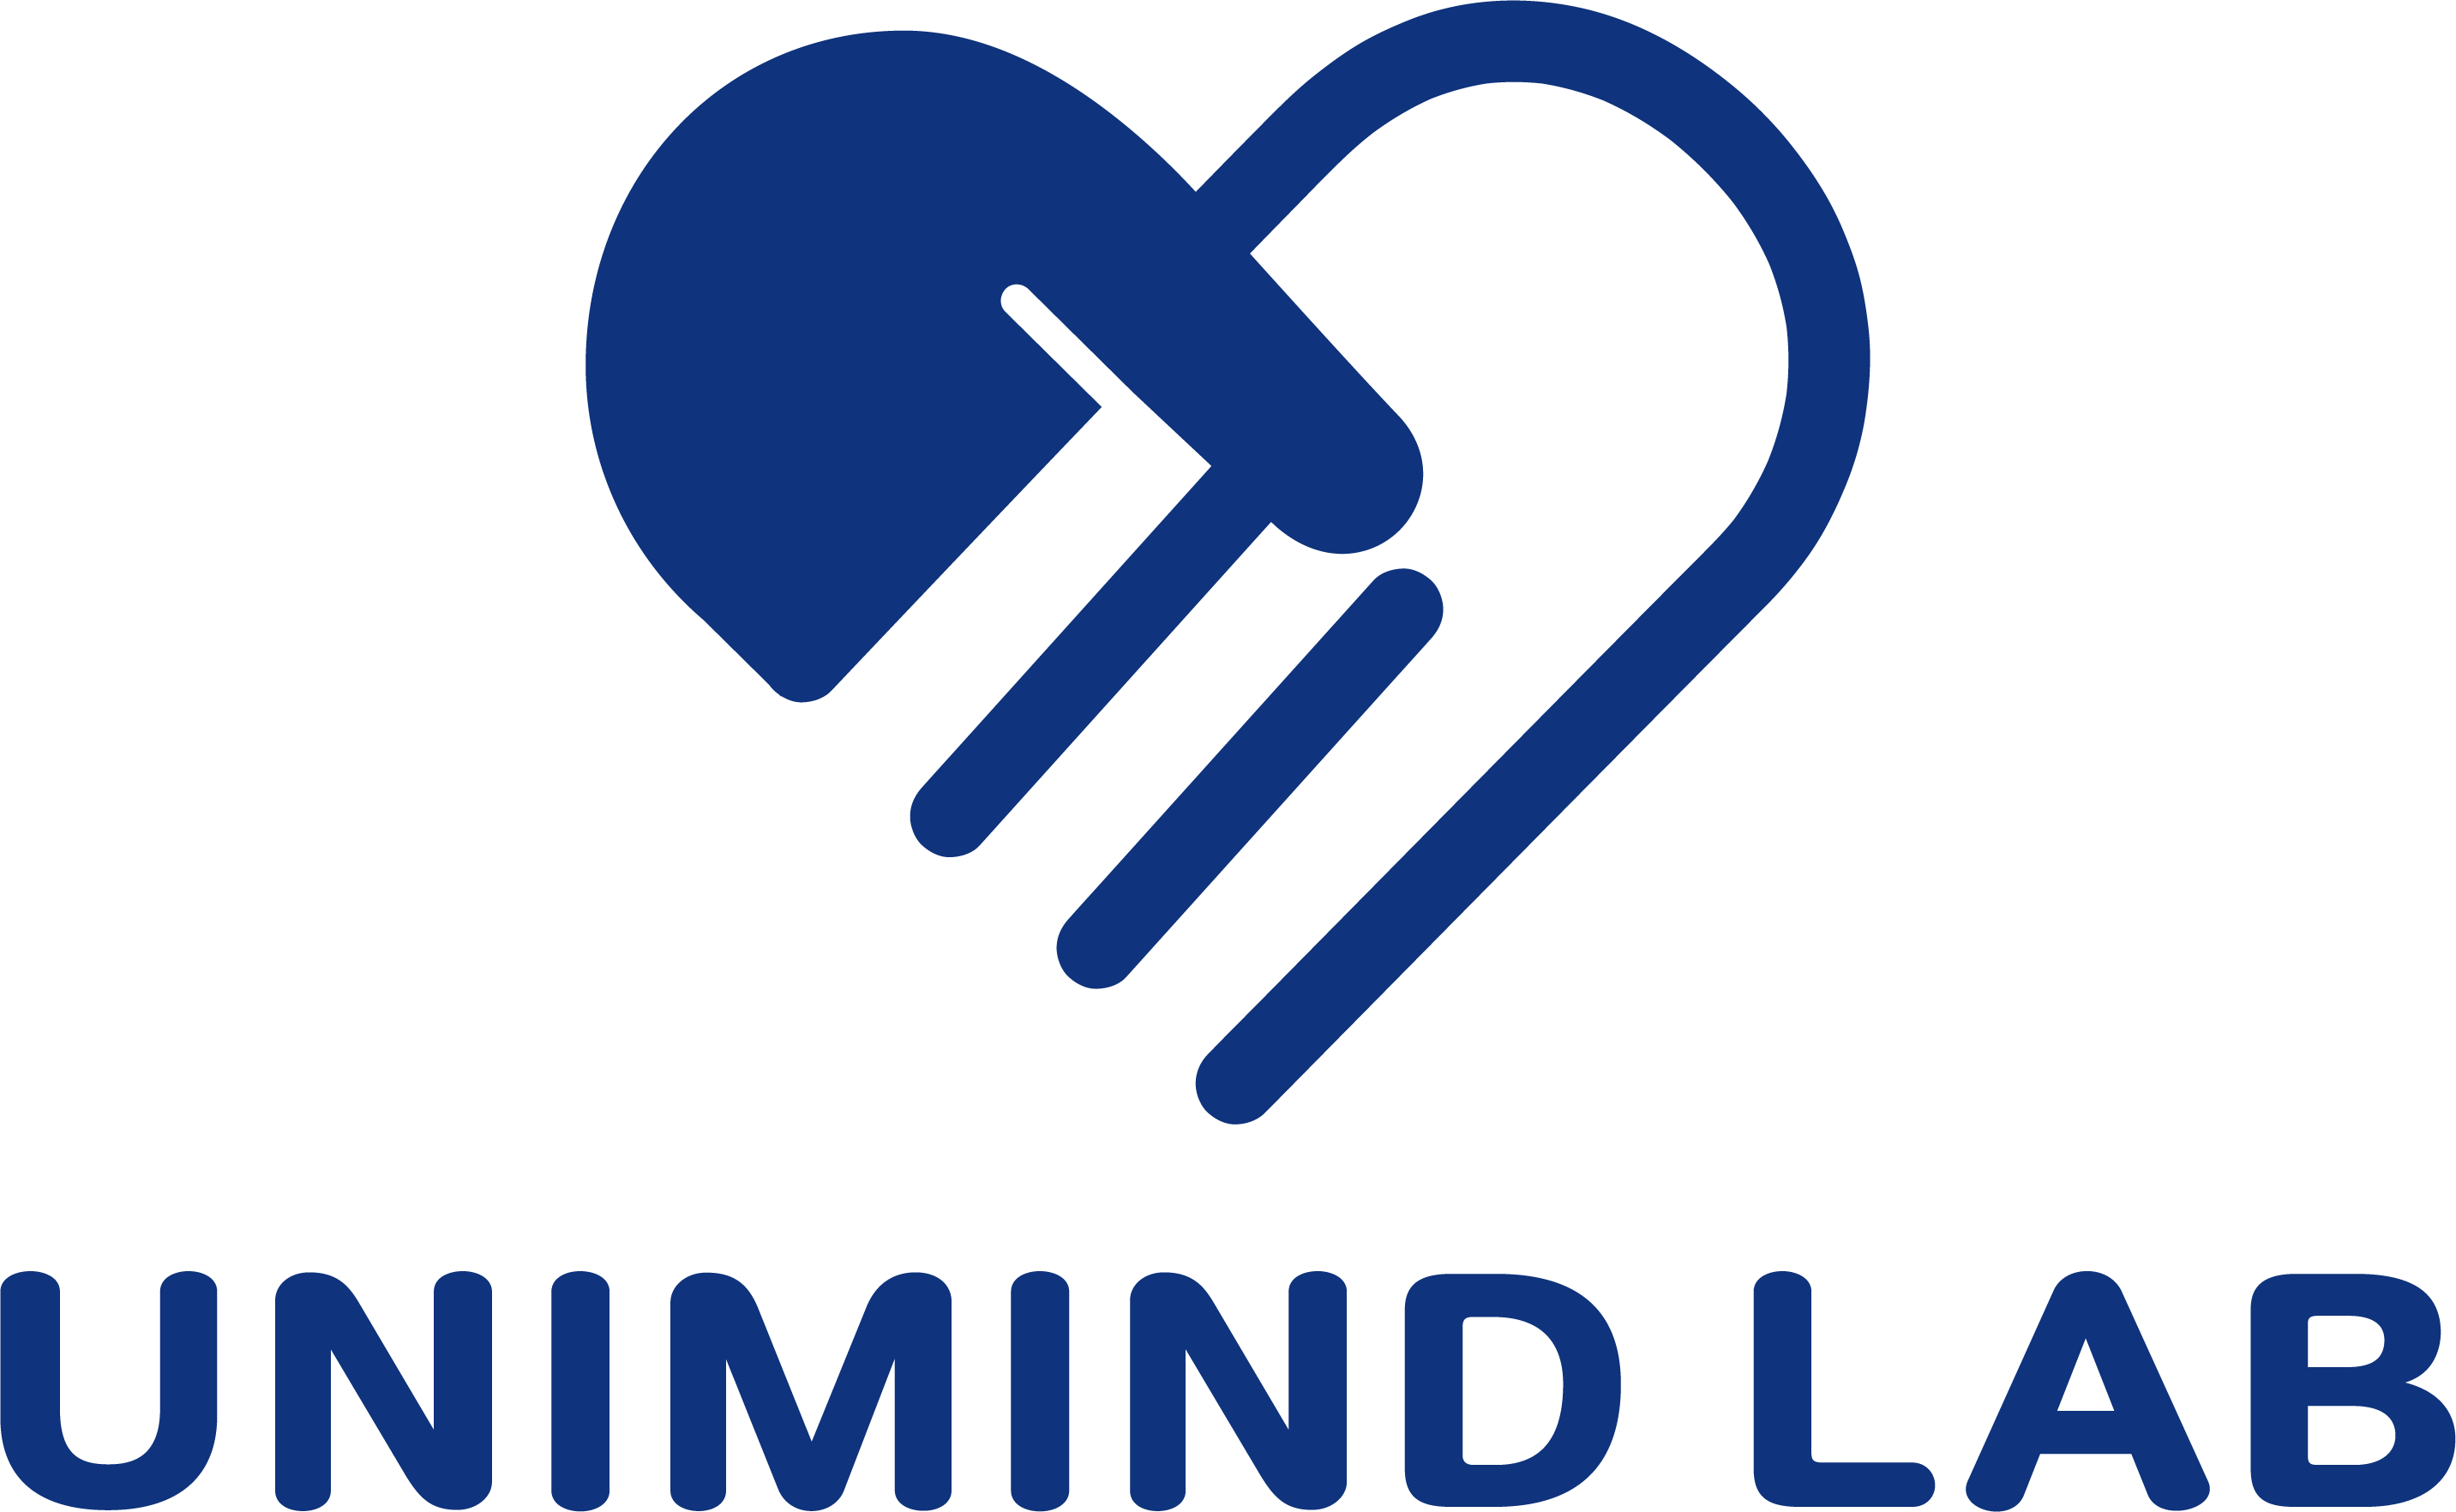 unimindlab_logo1.png